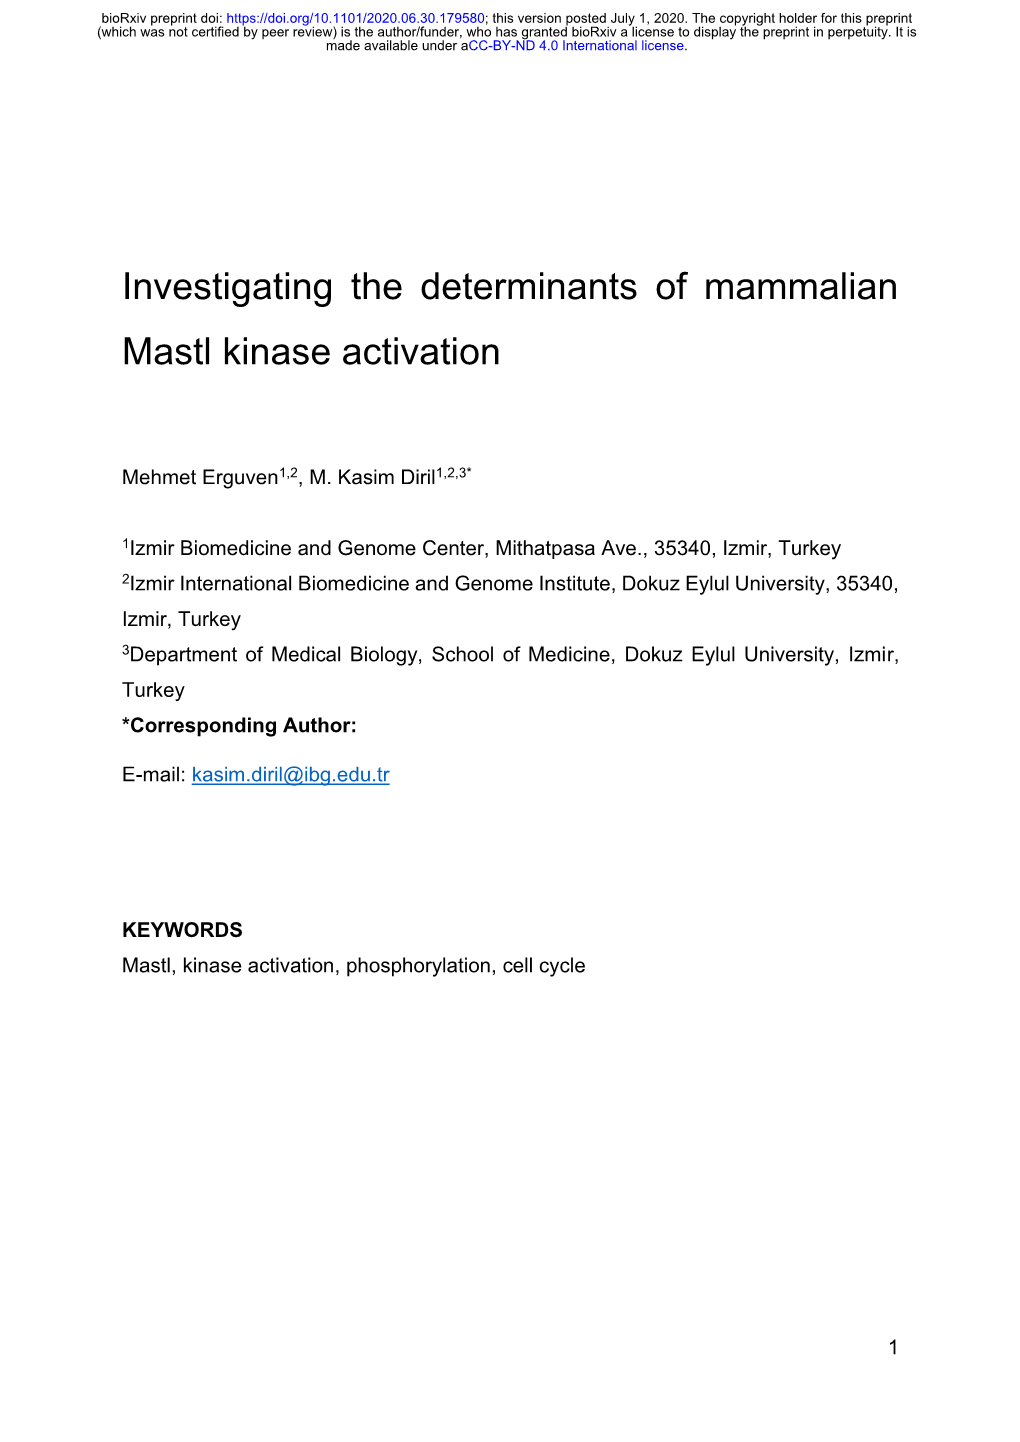 Investigating the Determinants of Mammalian Mastl Kinase Activation